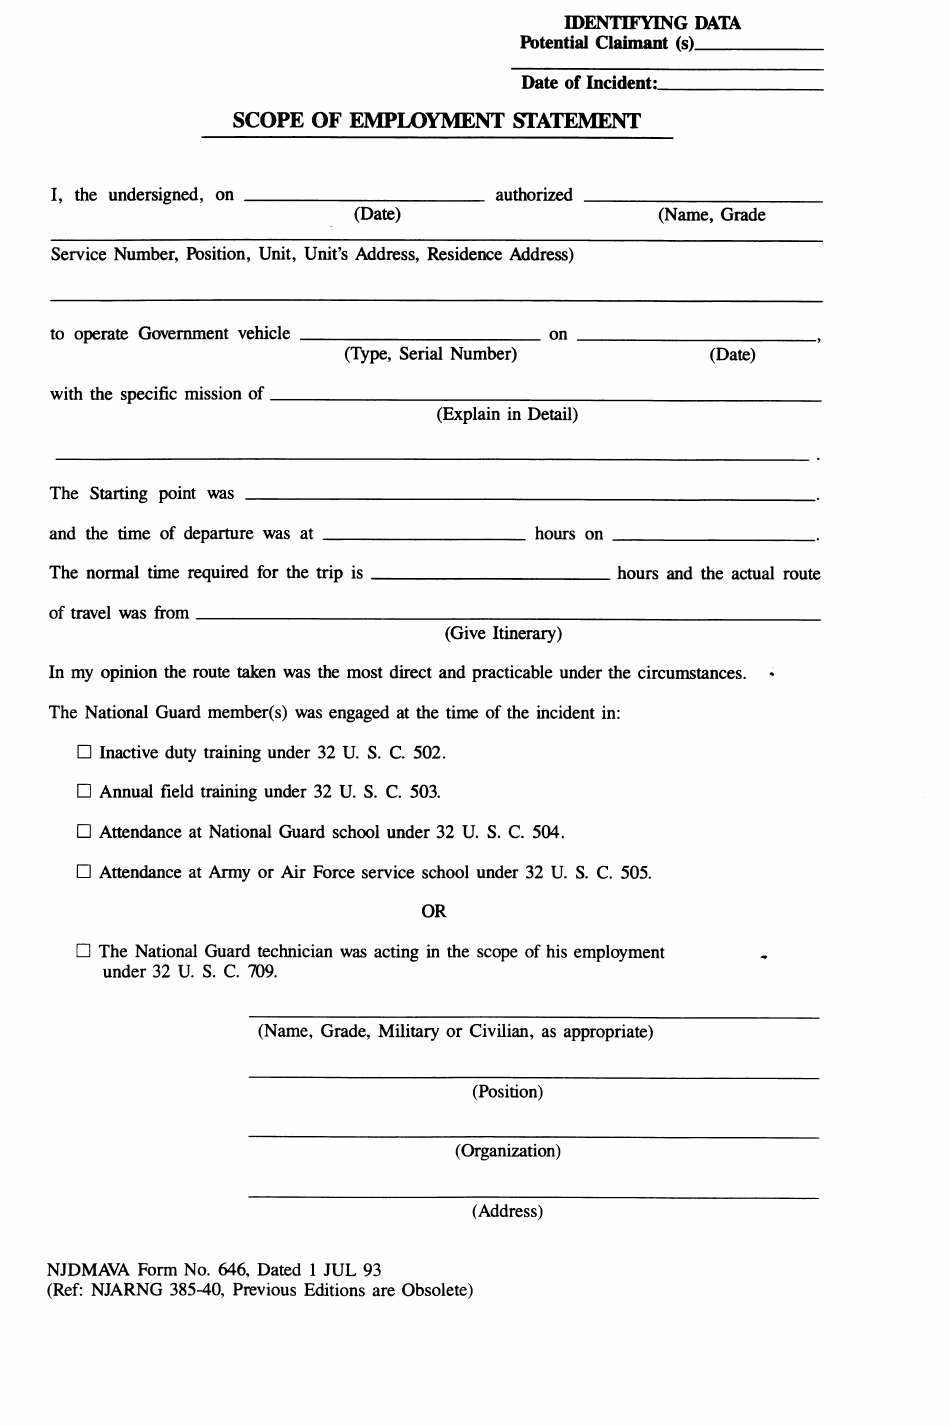 NJDMAVA Form 646 Scope of Employment Statement - New Jersey, Page 1